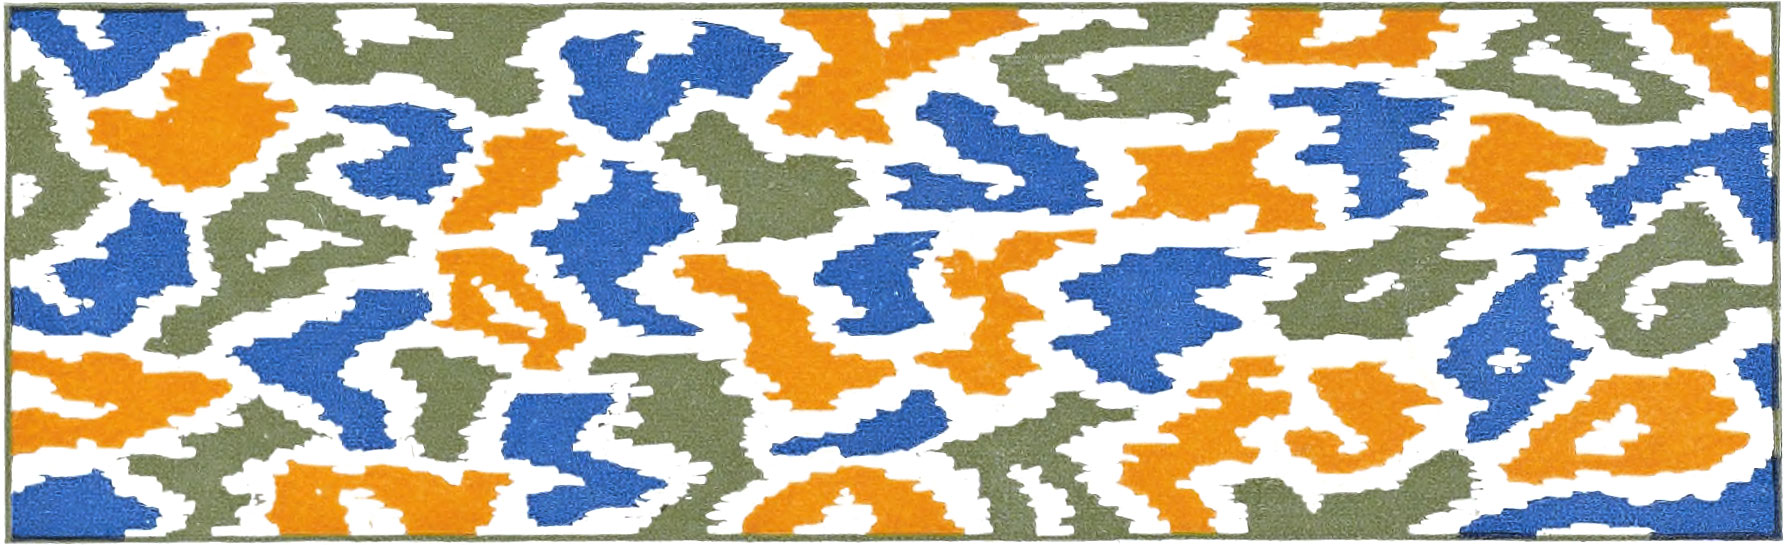 Camouflage-like pattern of blue, orange, and olive